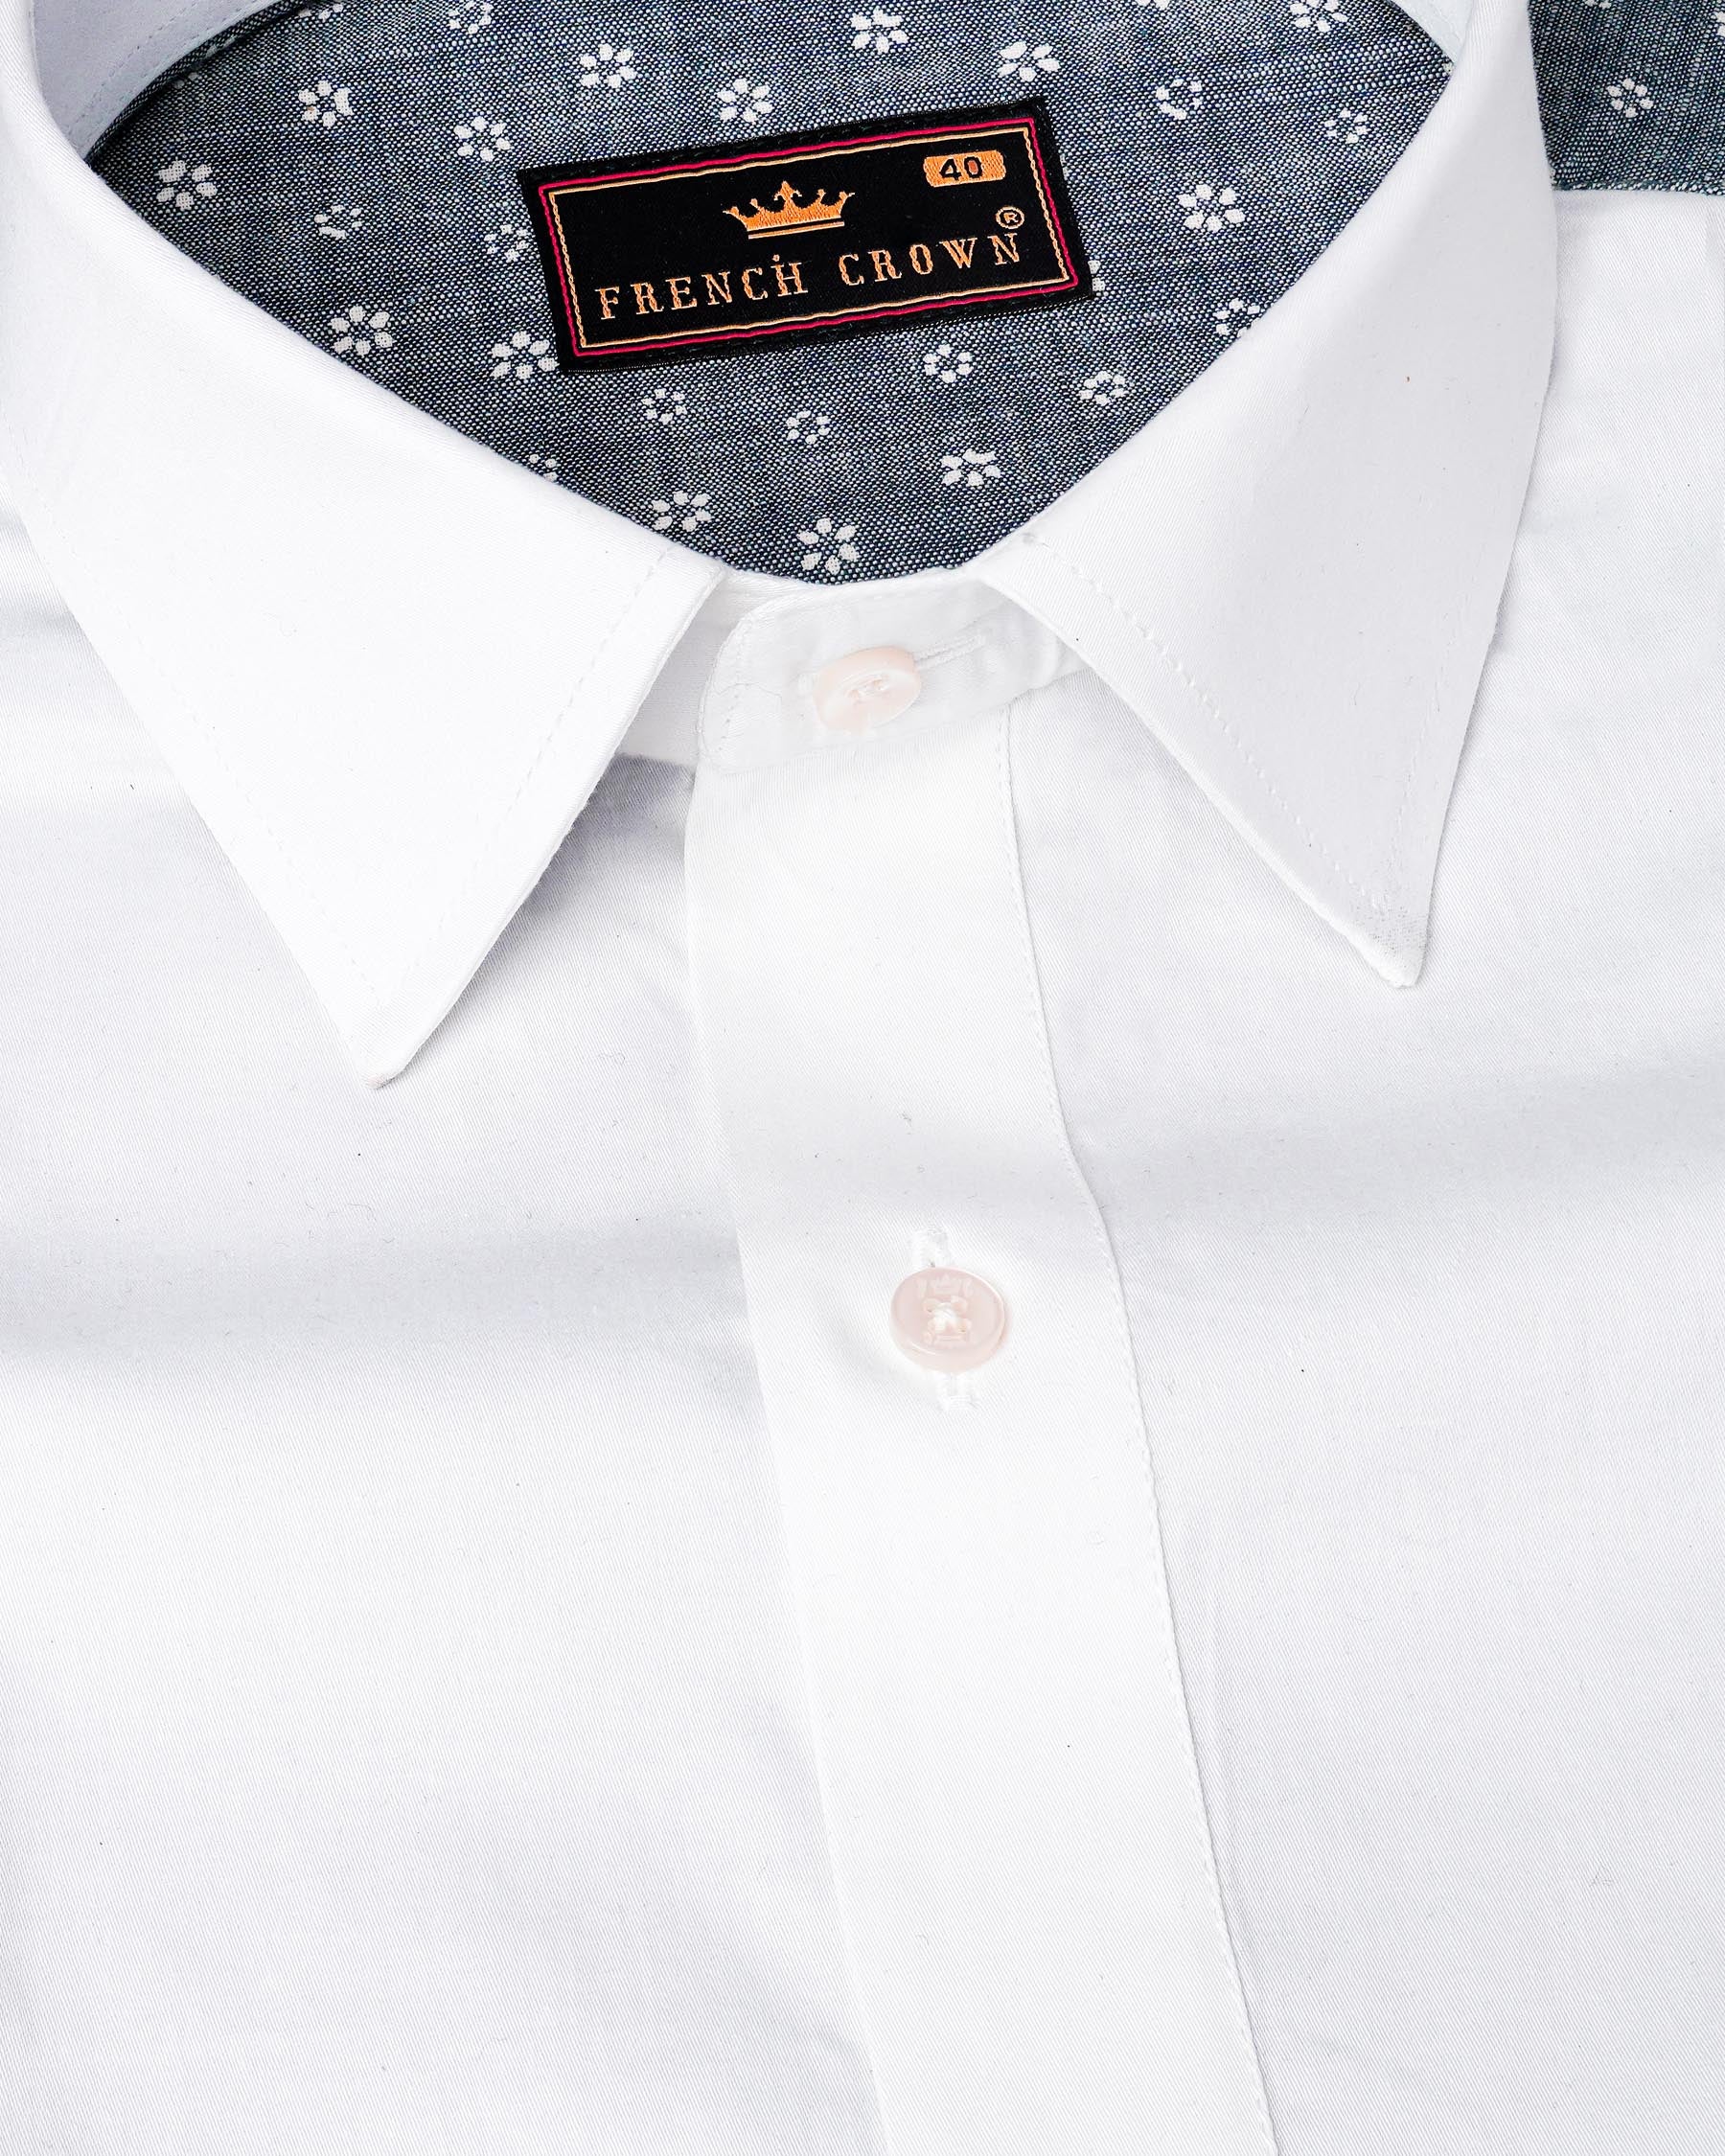 Comet Gray and Bright White Chambray Premium Cotton Designer Shirt